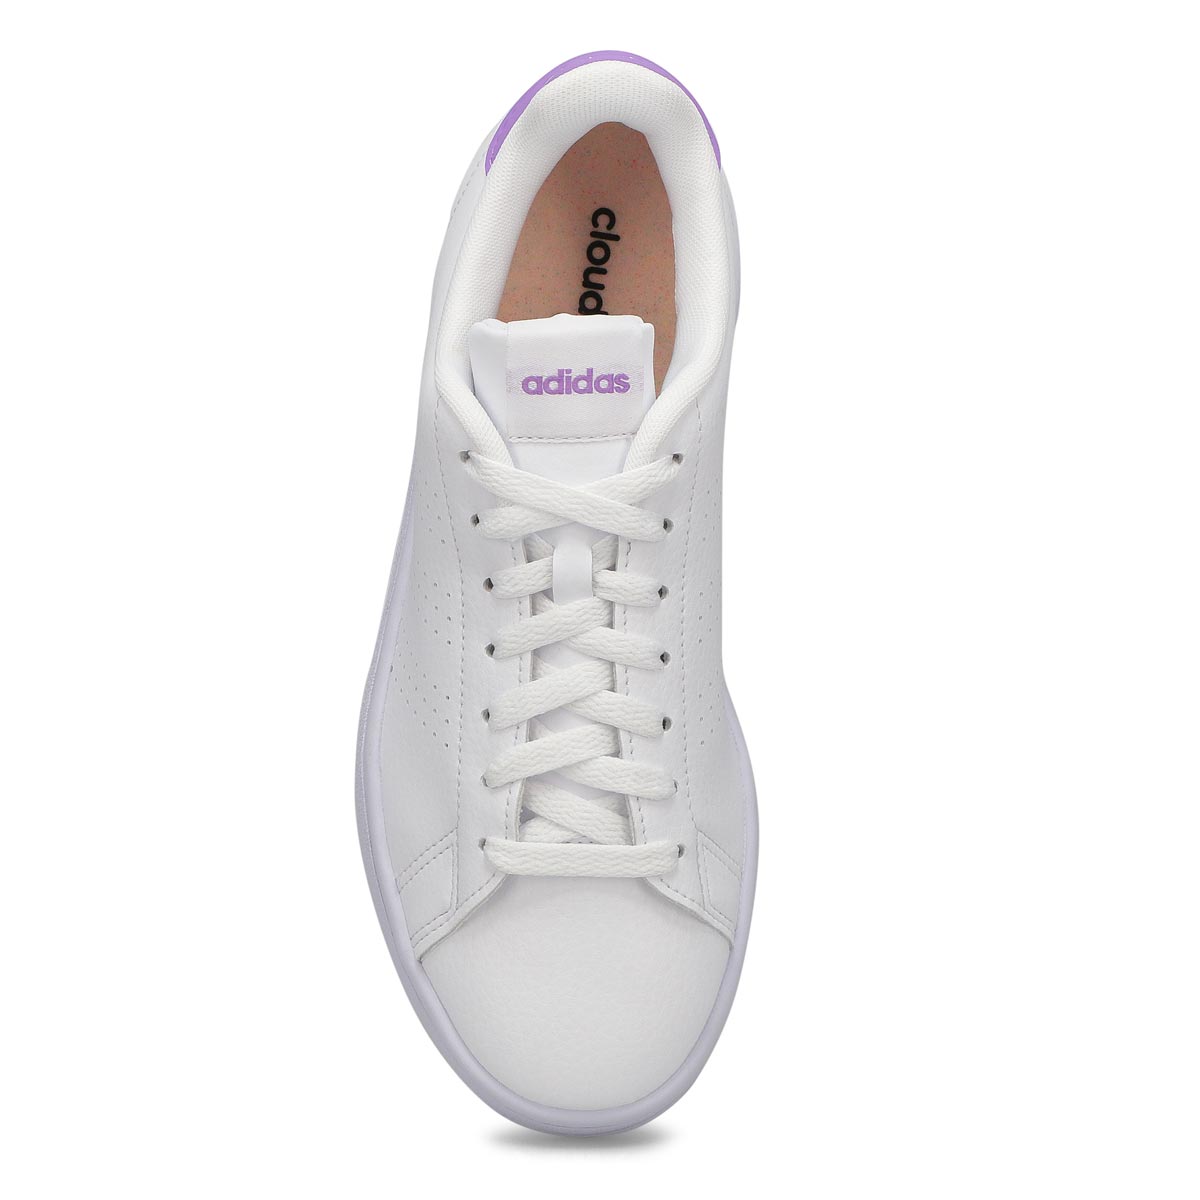 adidas Advantage Sneaker - White/ Vio | SoftMoc USA